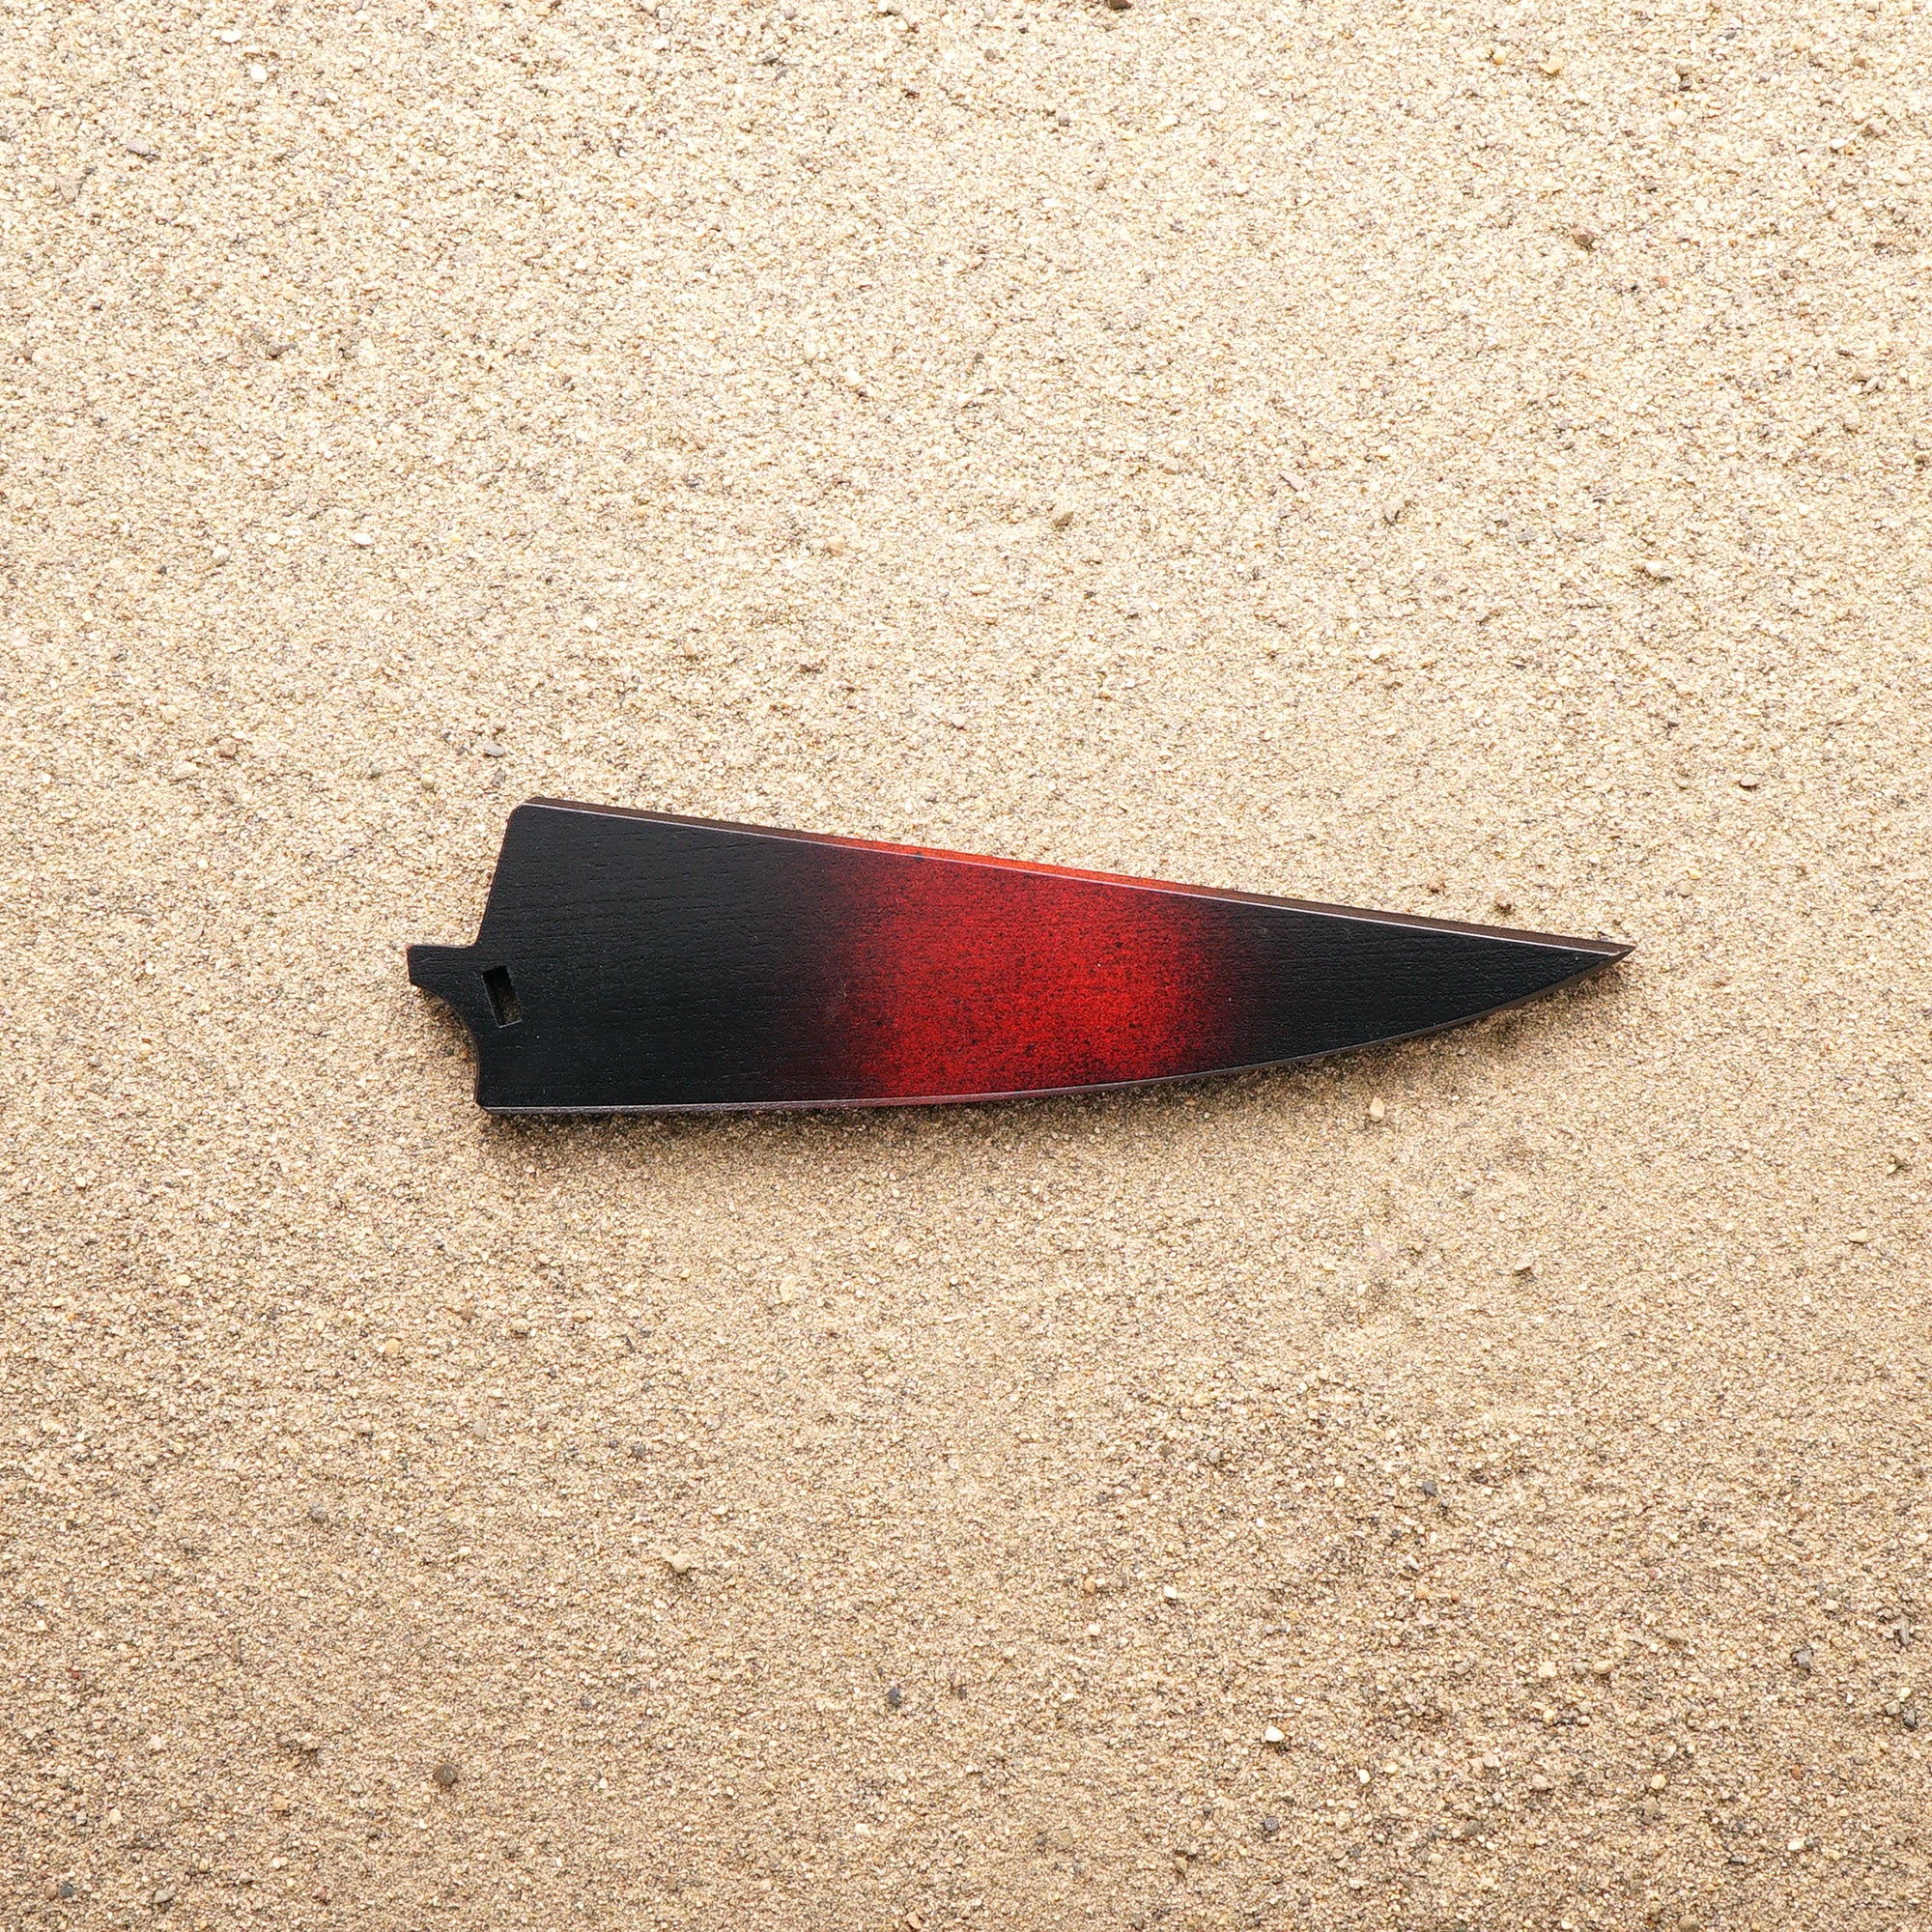 Red and black wood saya knife sheath for Town Cutler Baja utility knife.